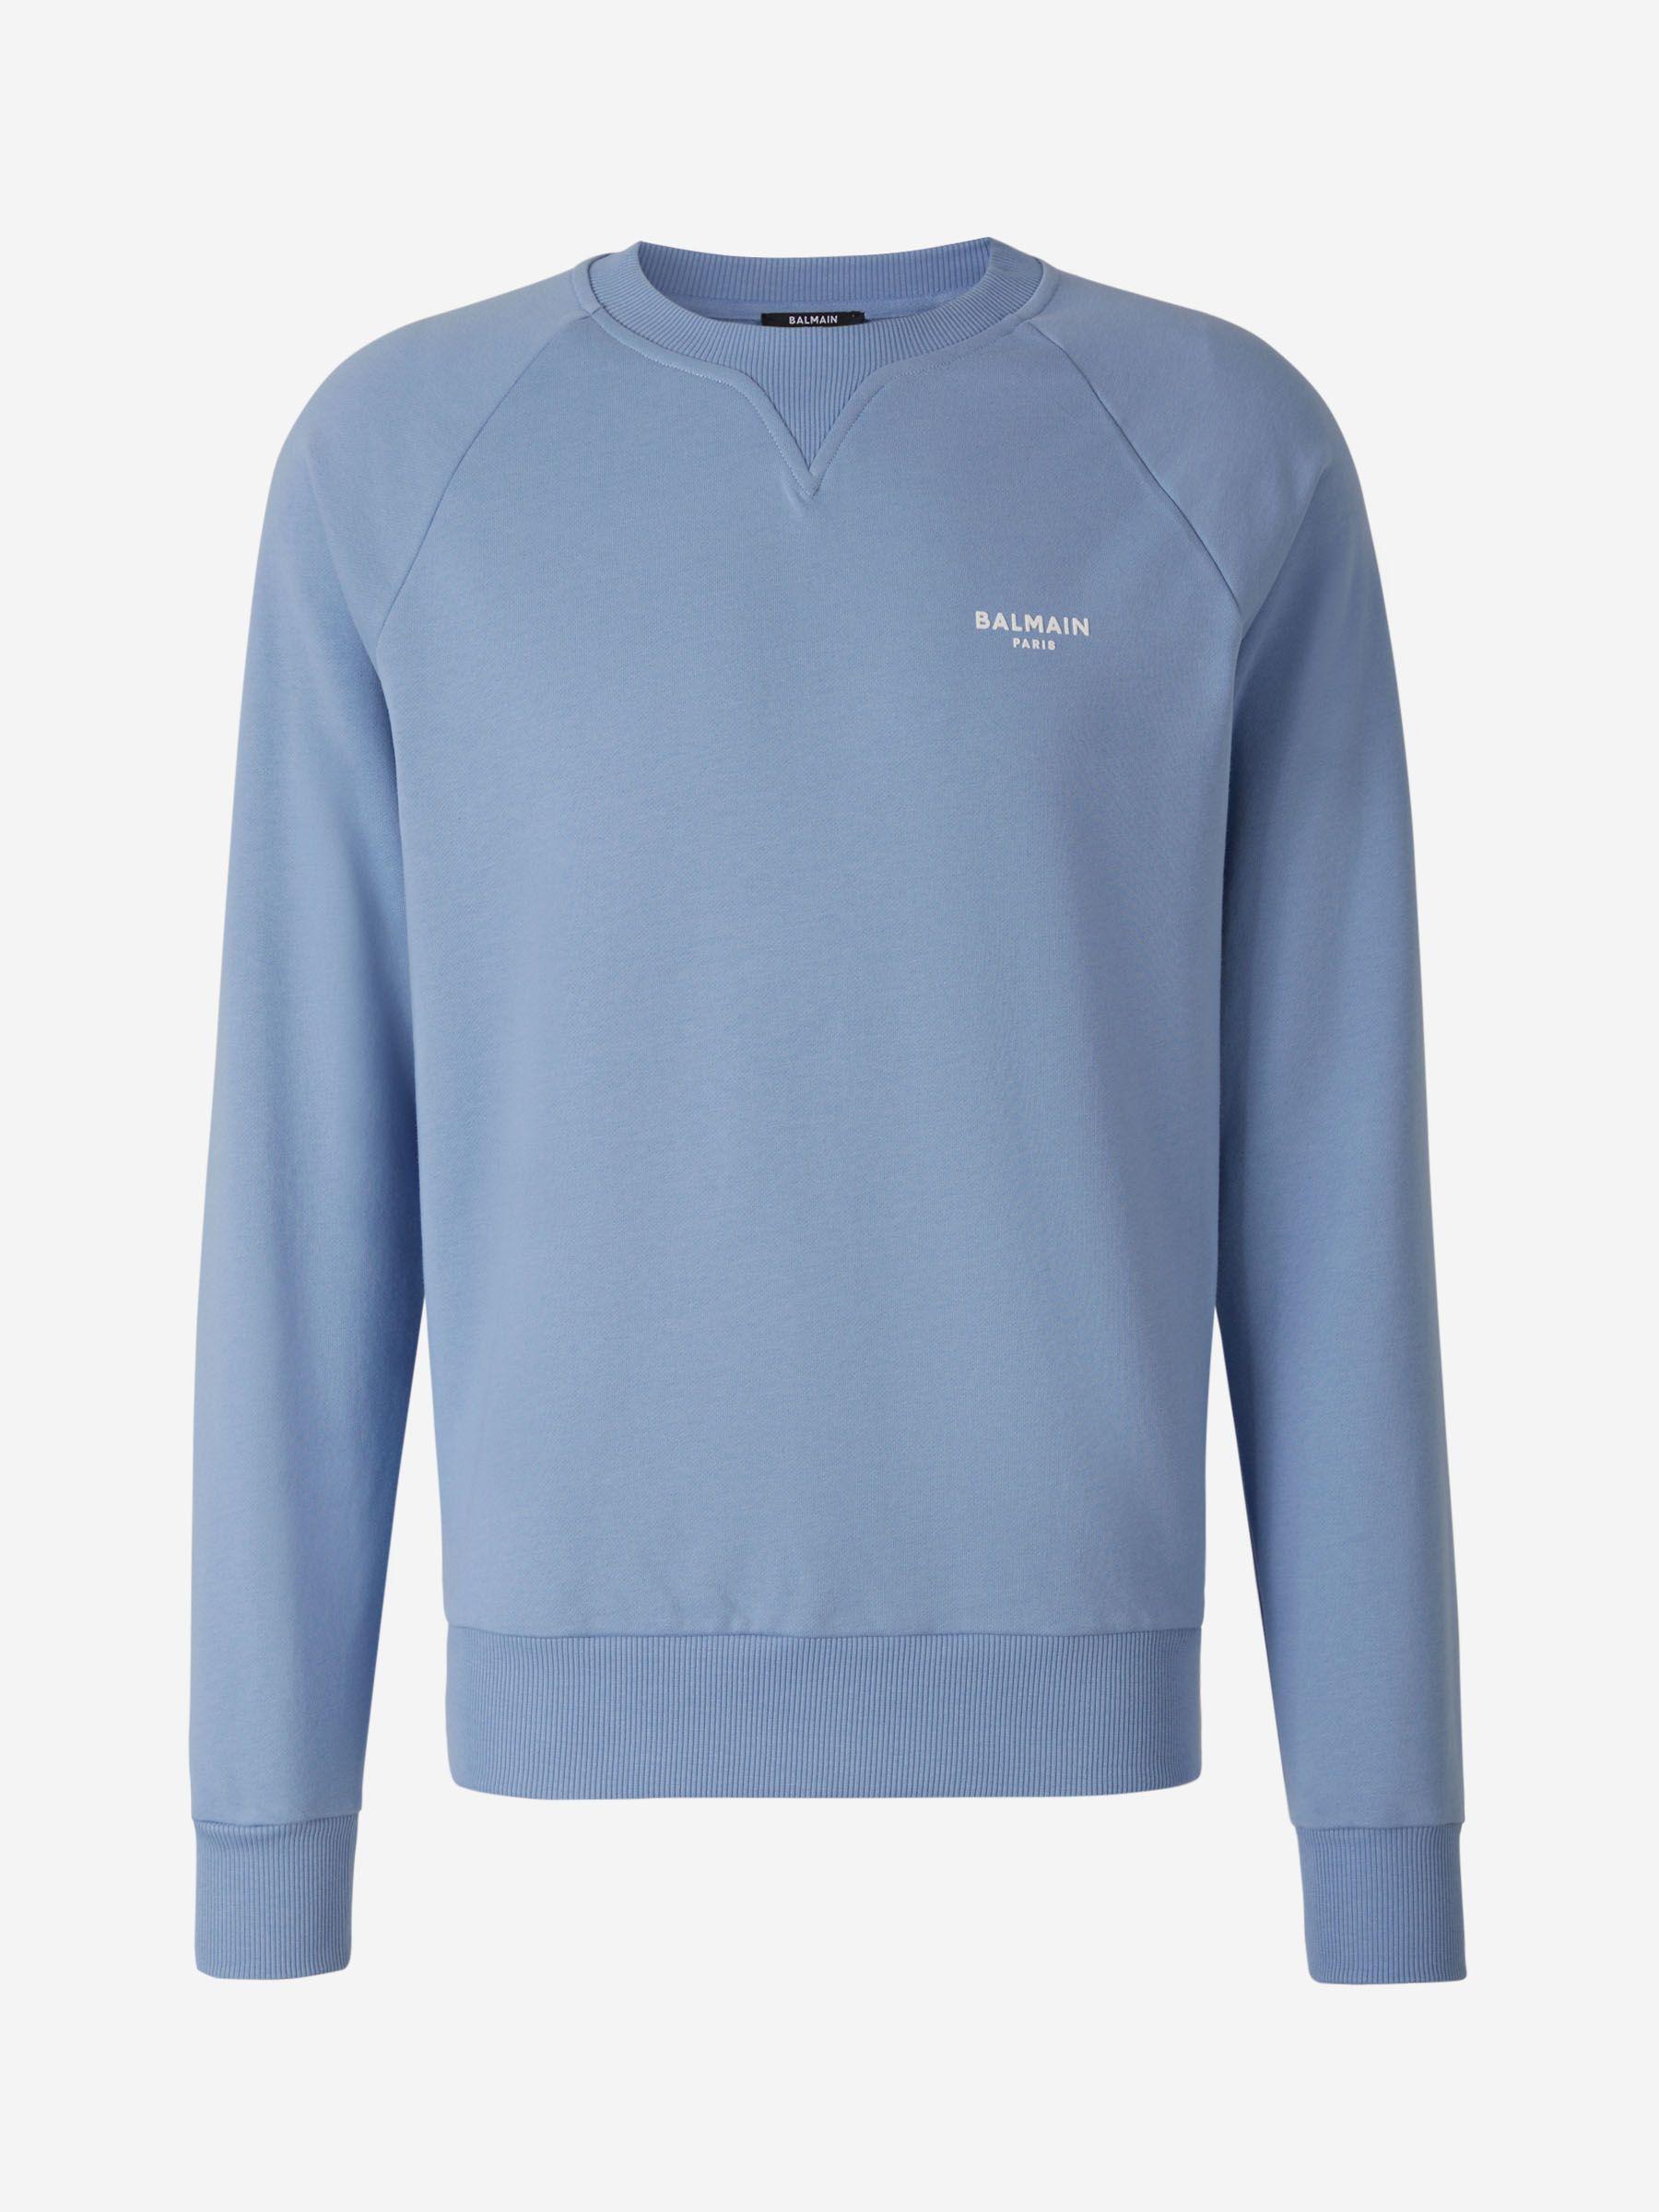 Balmain Logo Cotton Sweatshirt in Blue for Men | Lyst